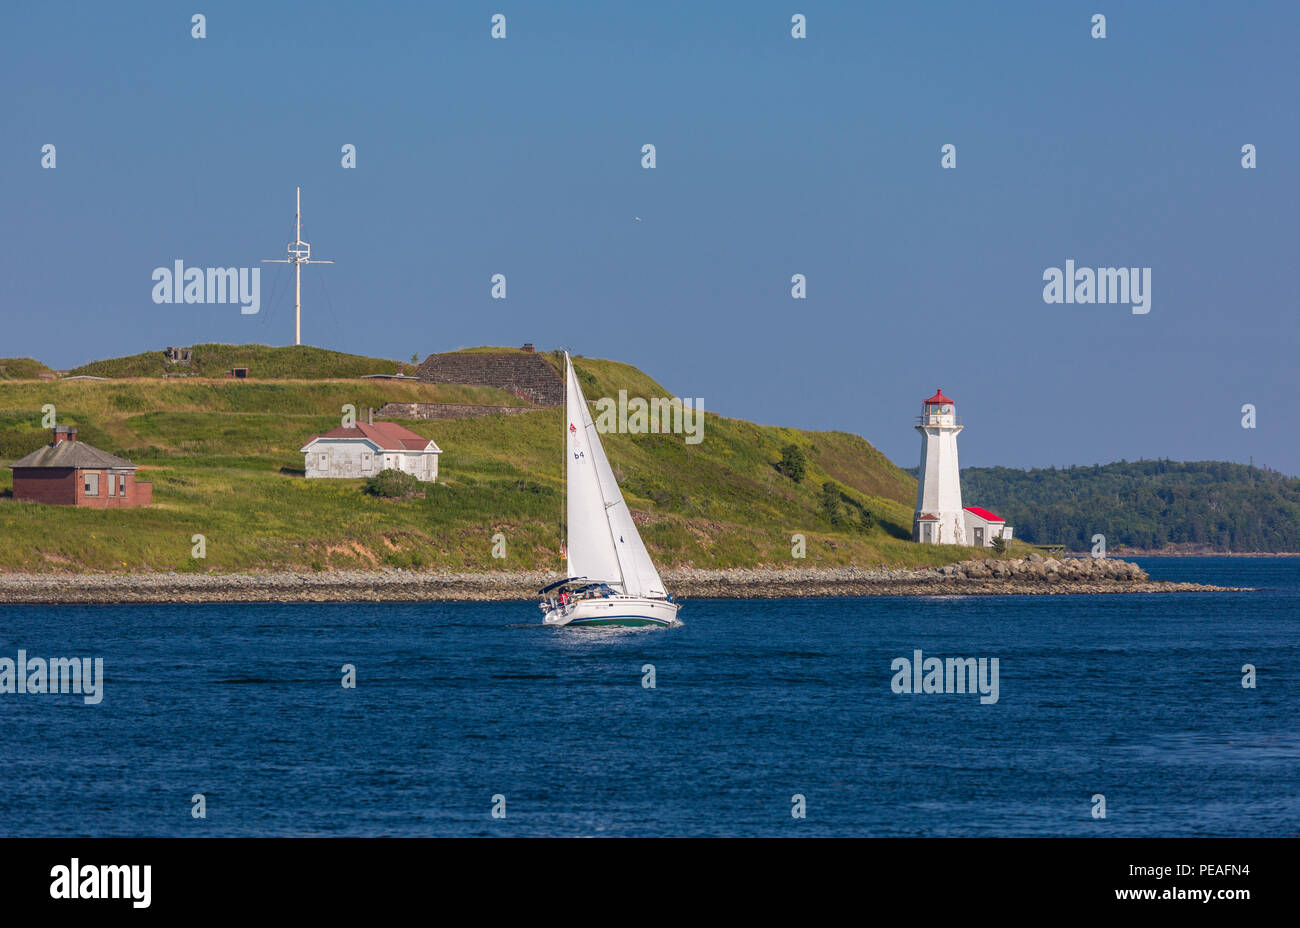 HALIFAX, NOVA SCOTIA, CANADA - Sailboat passes lighthouse on McNabs Island in Halifax seaport harbor. Stock Photo